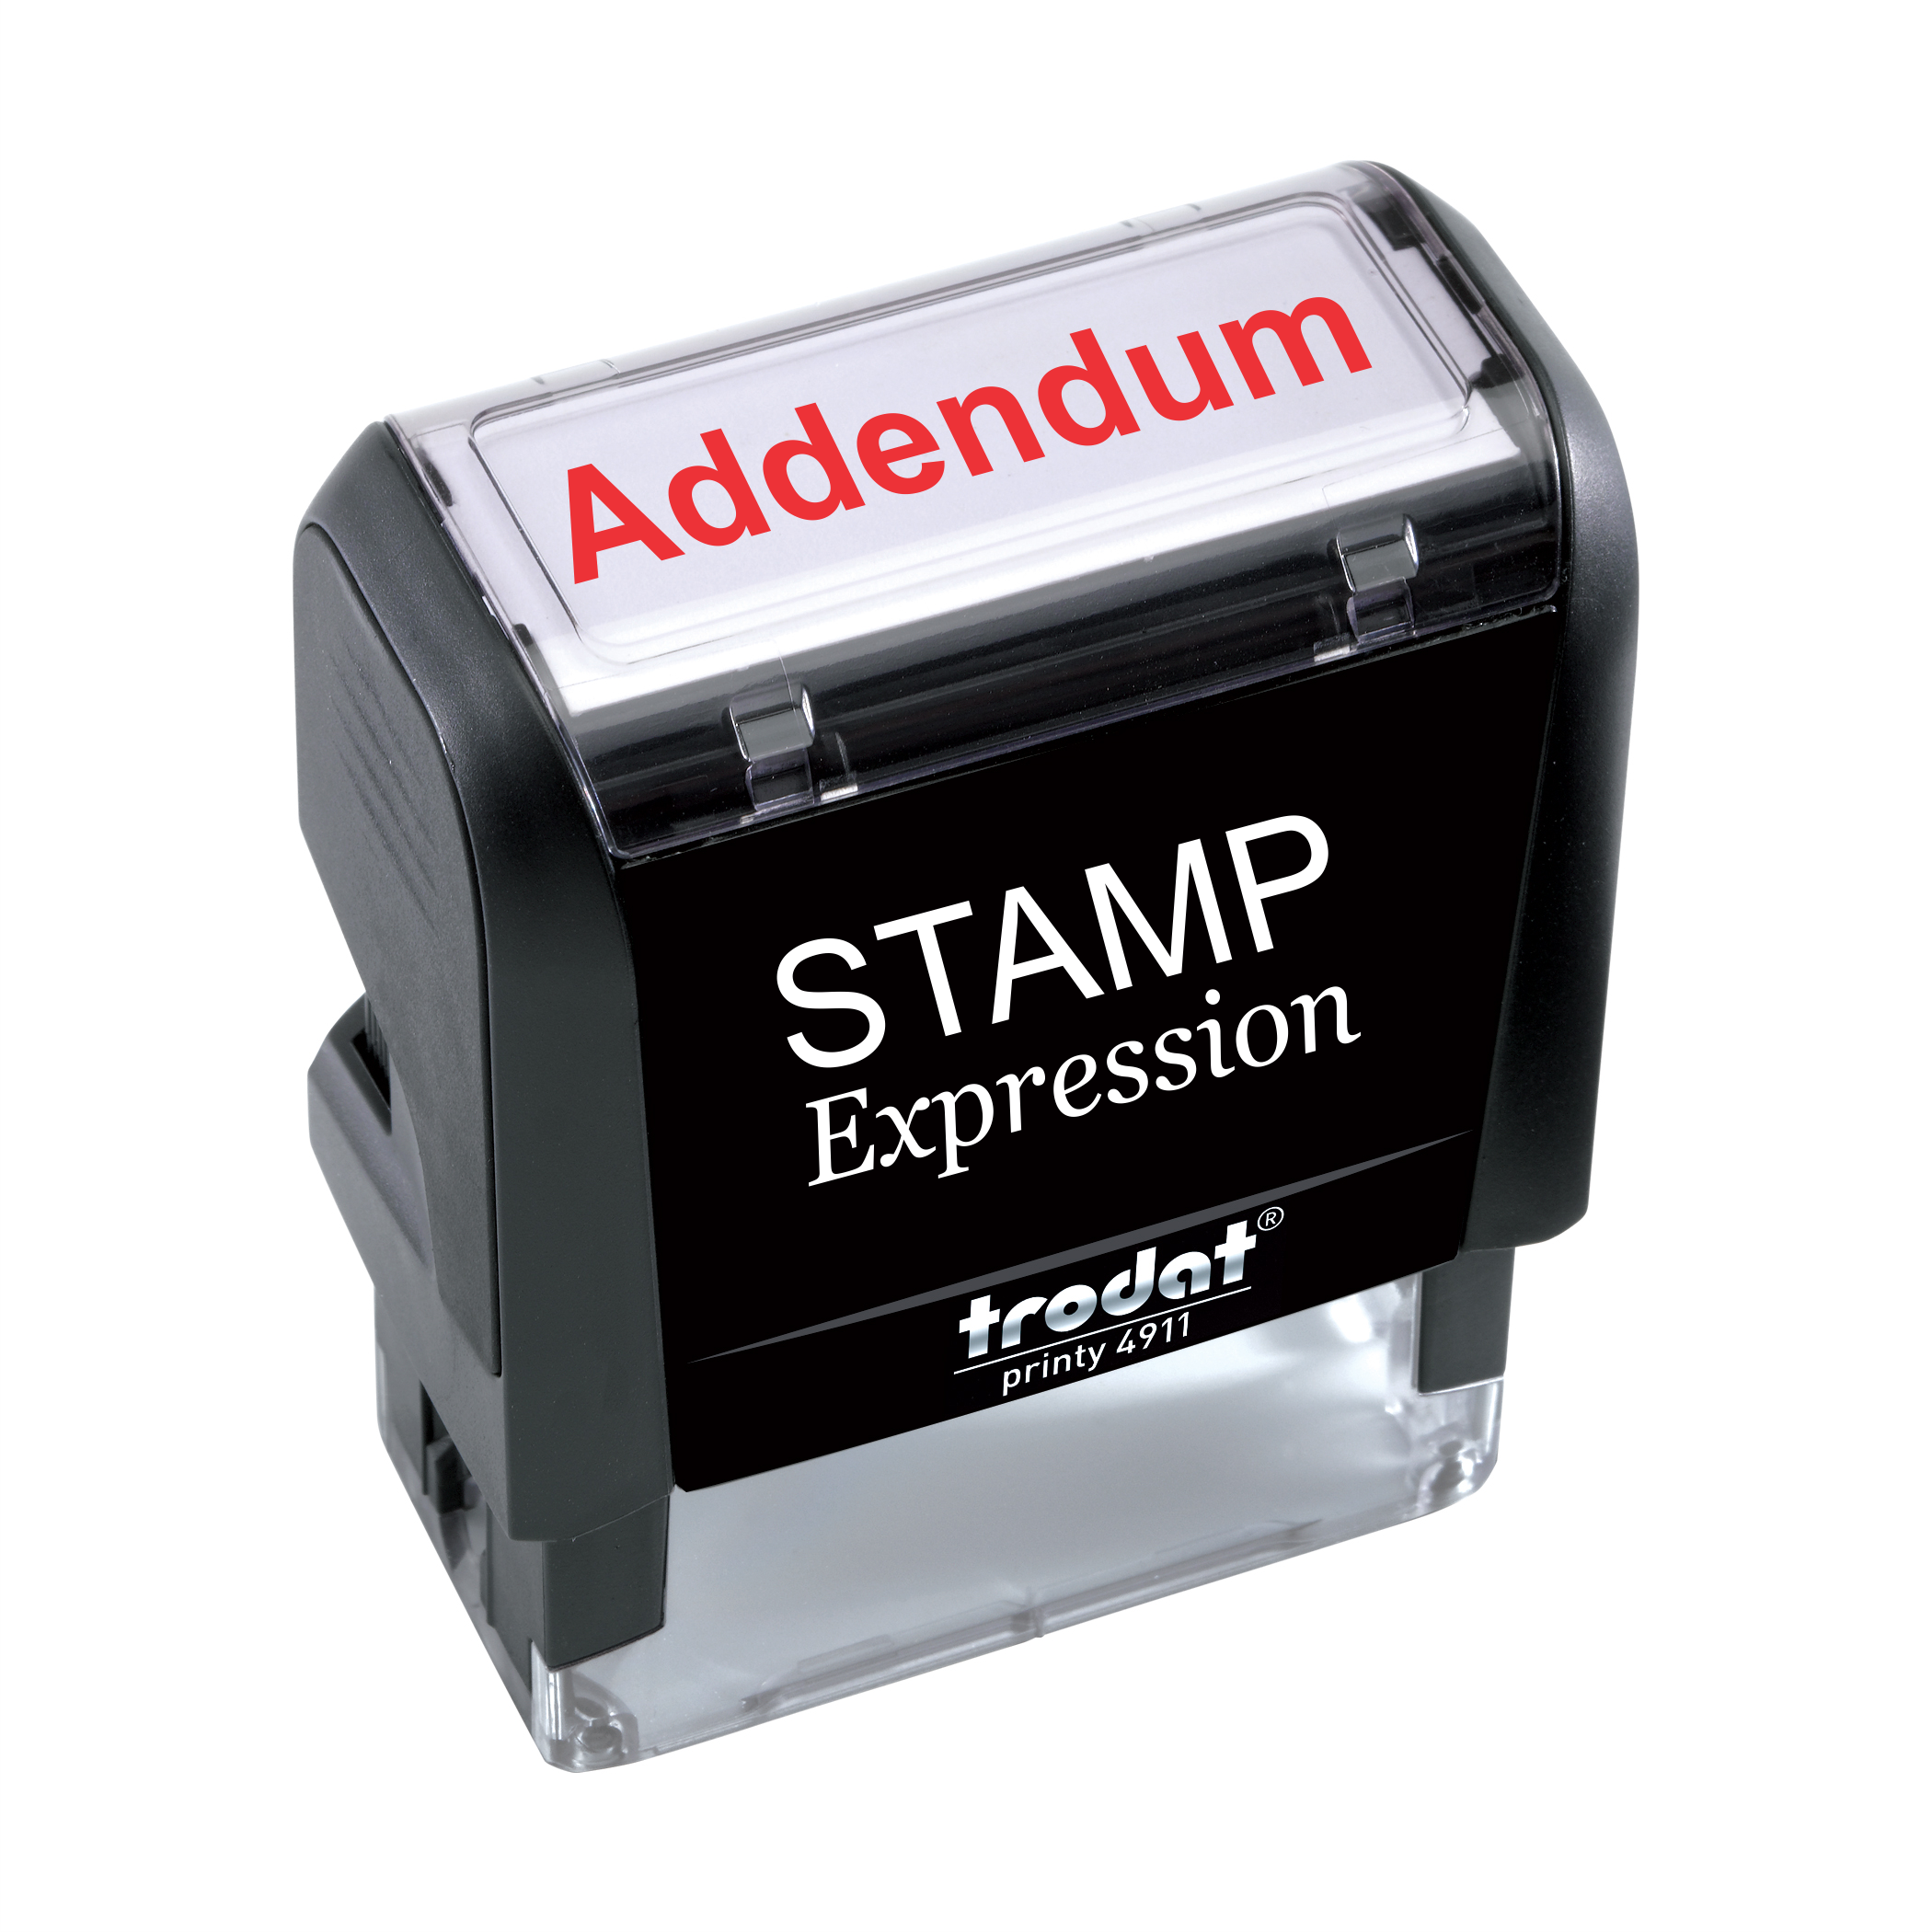 Addendum Office Self Inking Rubber Stamp